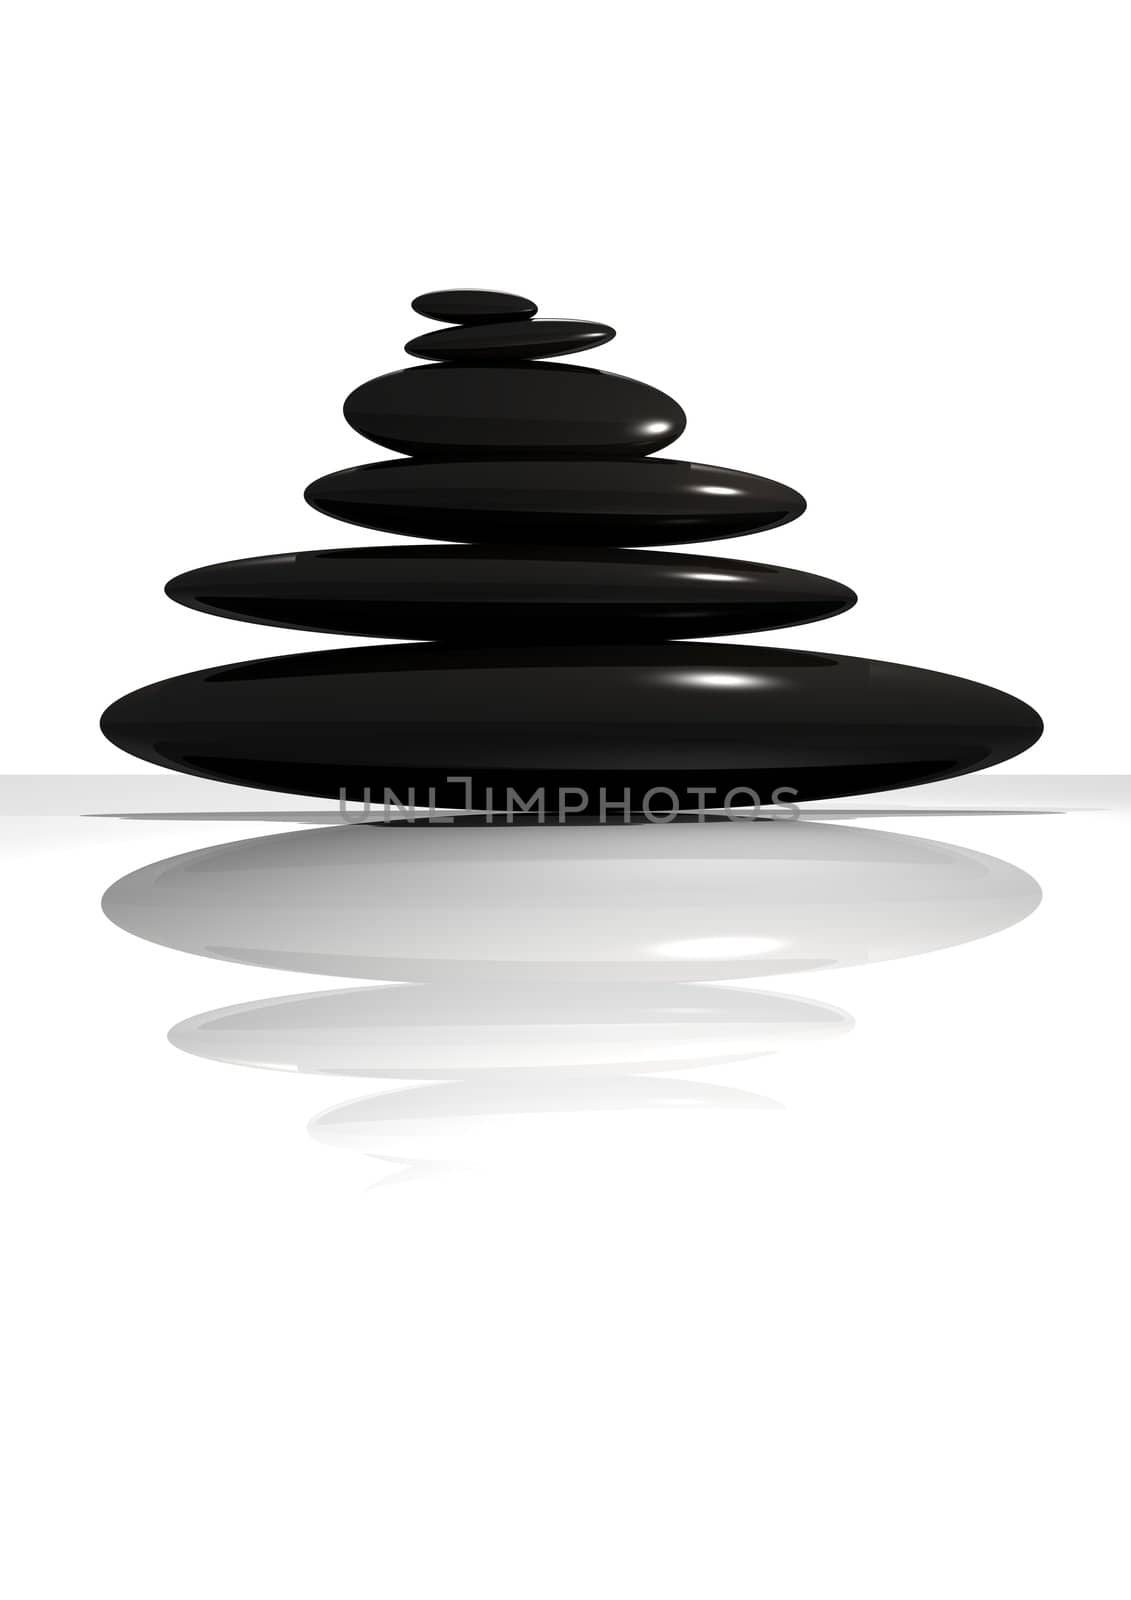 Black zen stones by Elenaphotos21